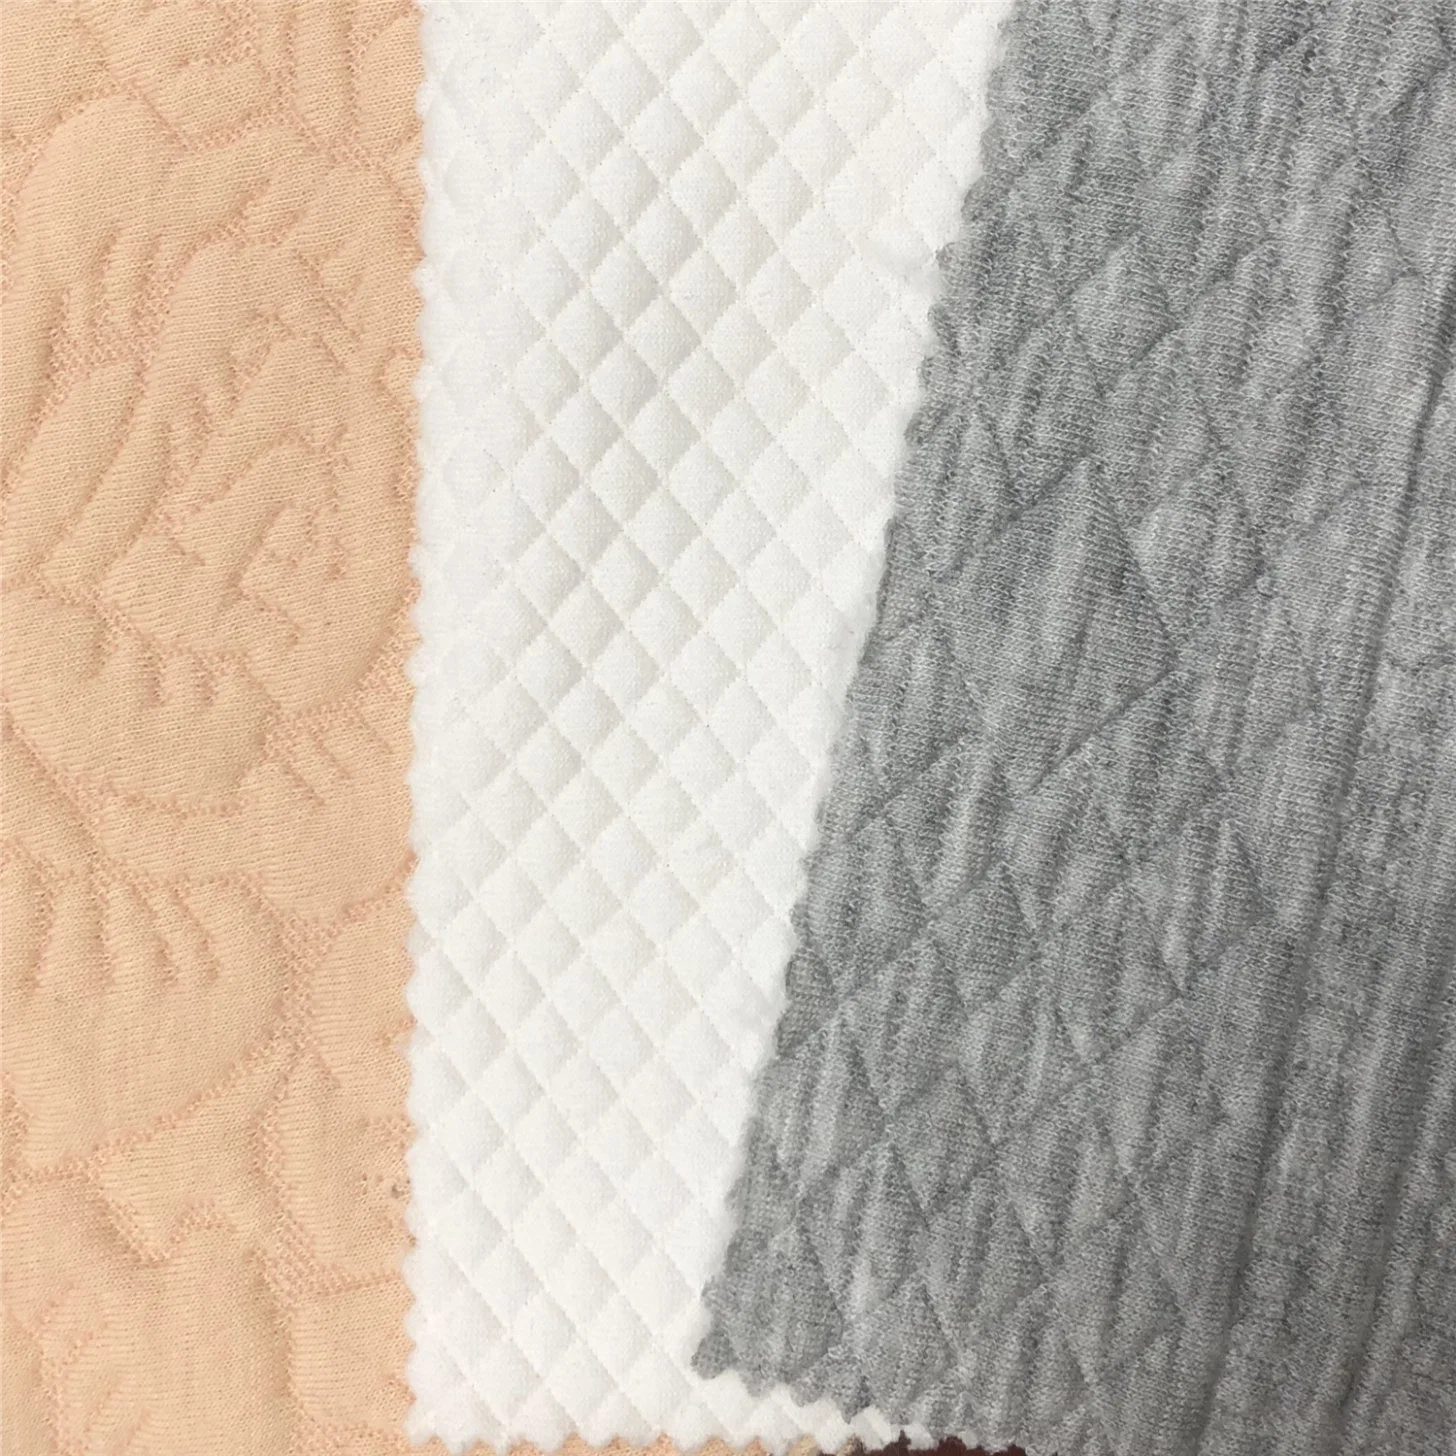 Jacquard Knitting Air-Tier Mattress Home Textile Fabric